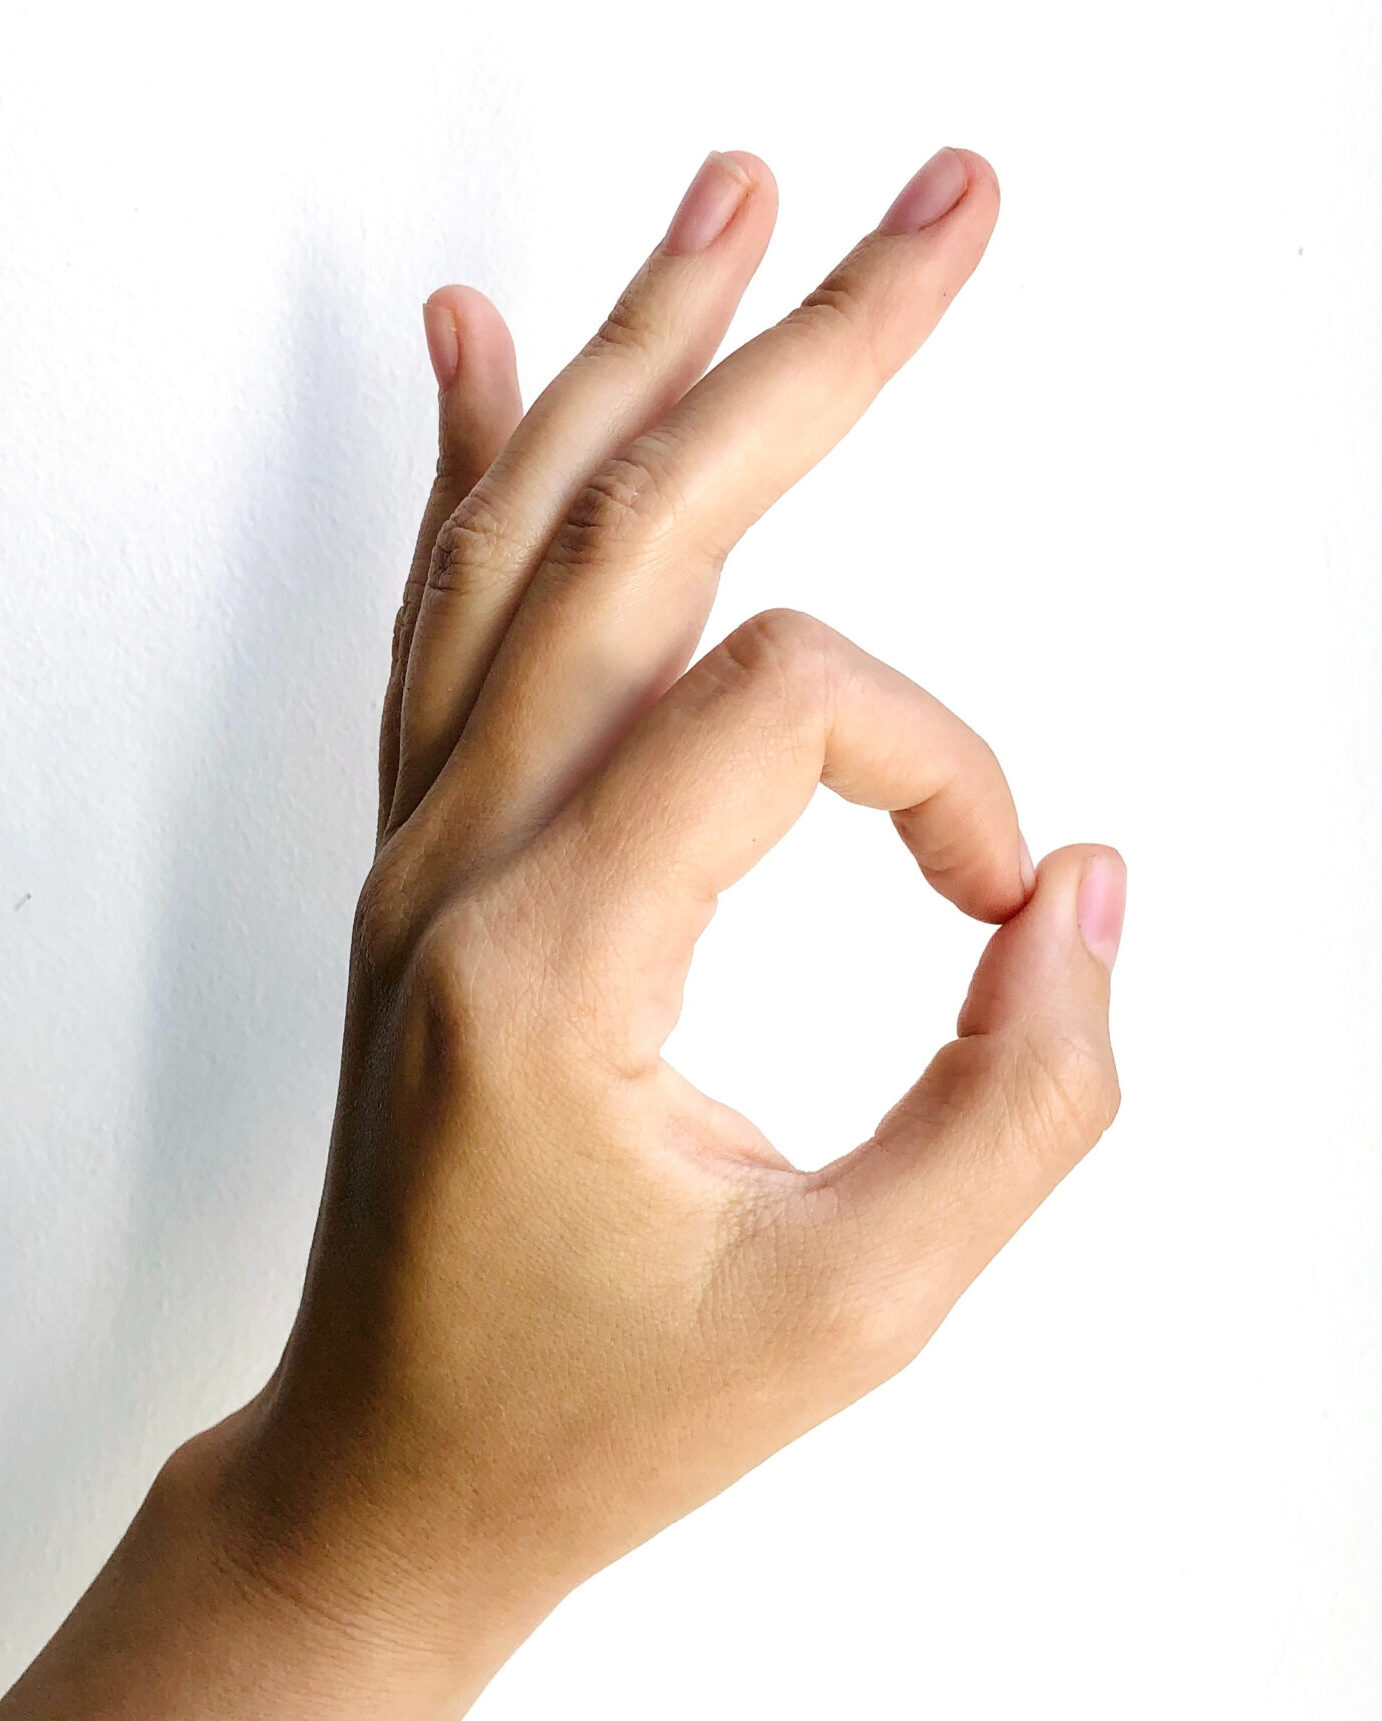 Hand making "OK" gesture.